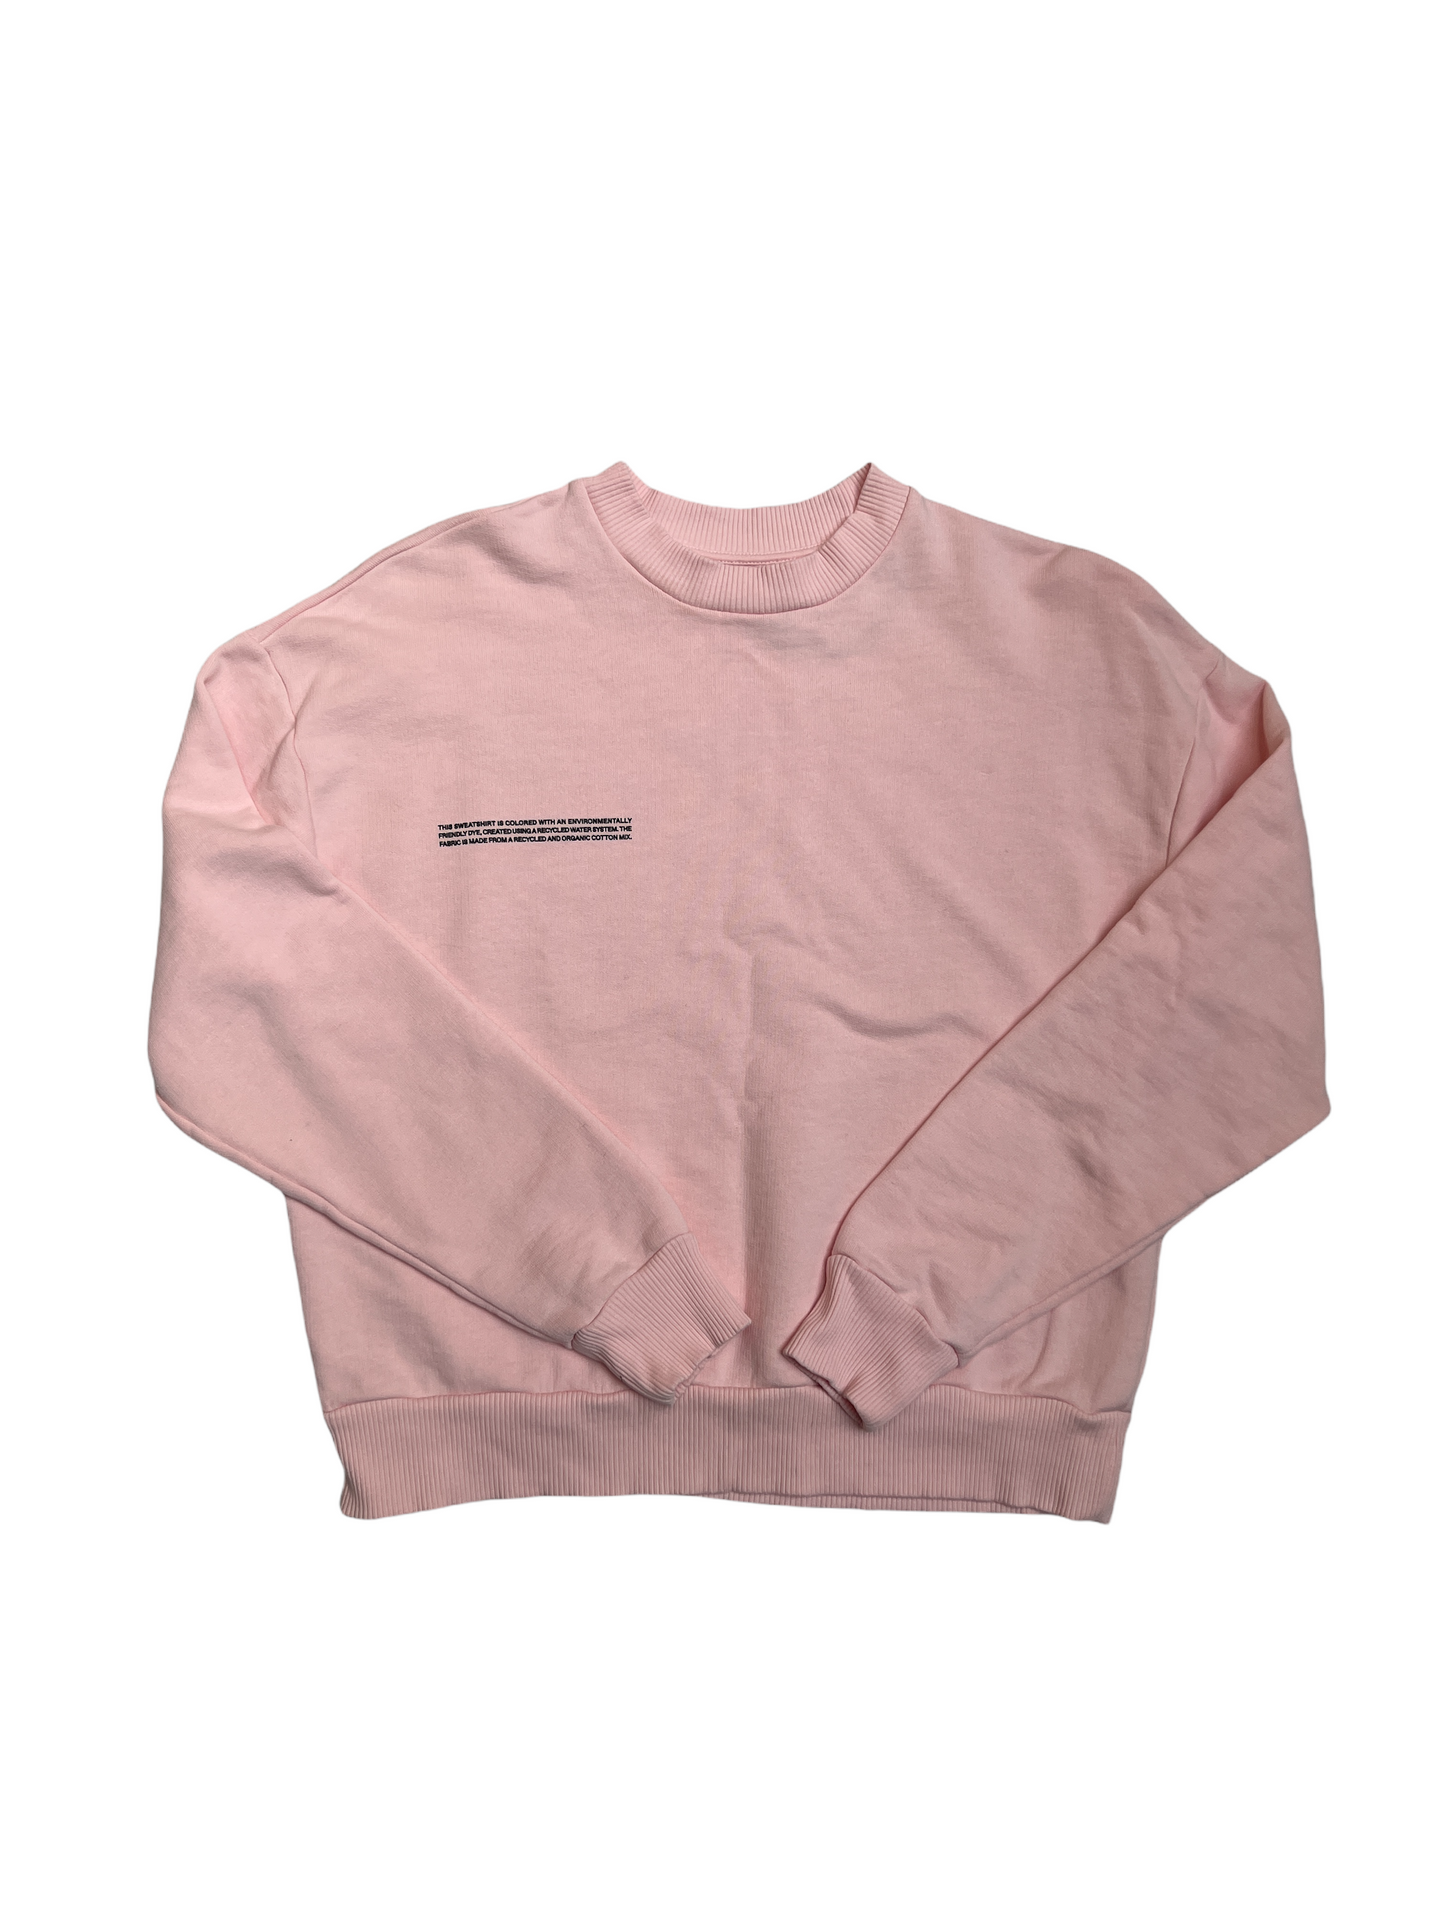 Pink Sweater - XXS